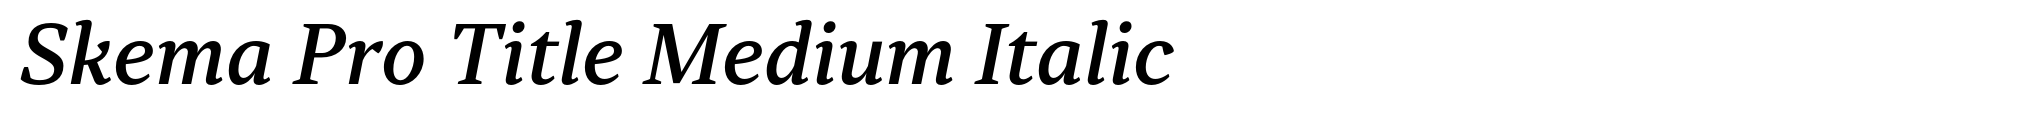 Skema Pro Title Medium Italic image